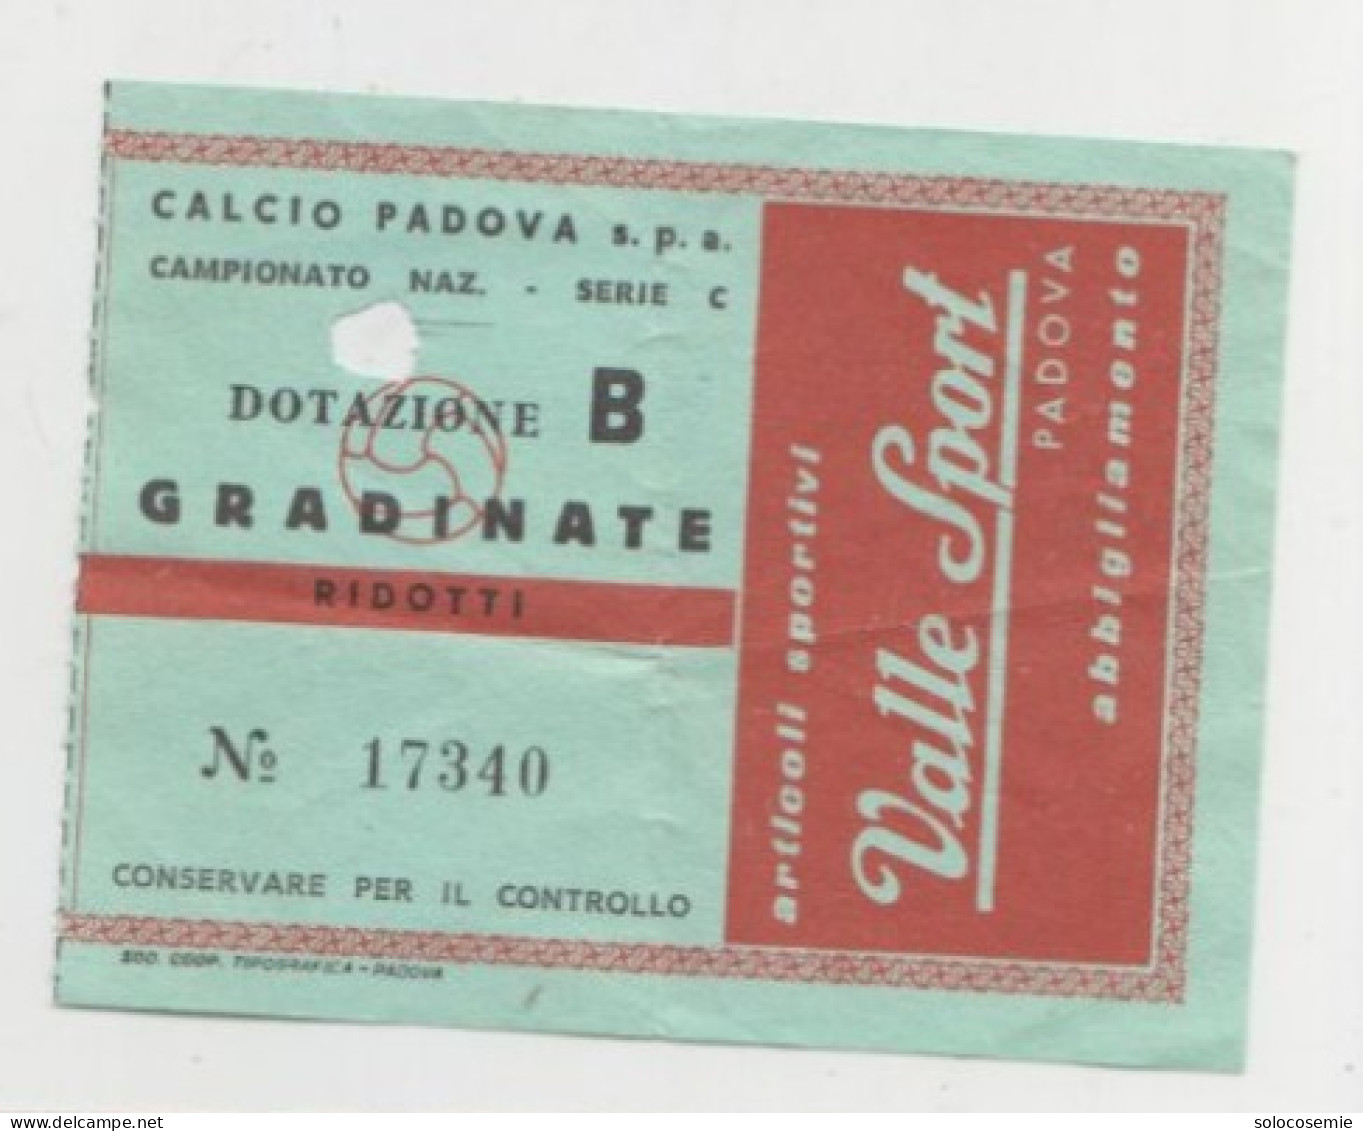 PADOVA #  Calcio - Camp. Naz. Serie C   #  Ingresso  Stadio / Ticket  - 17340  (F) - Tickets D'entrée